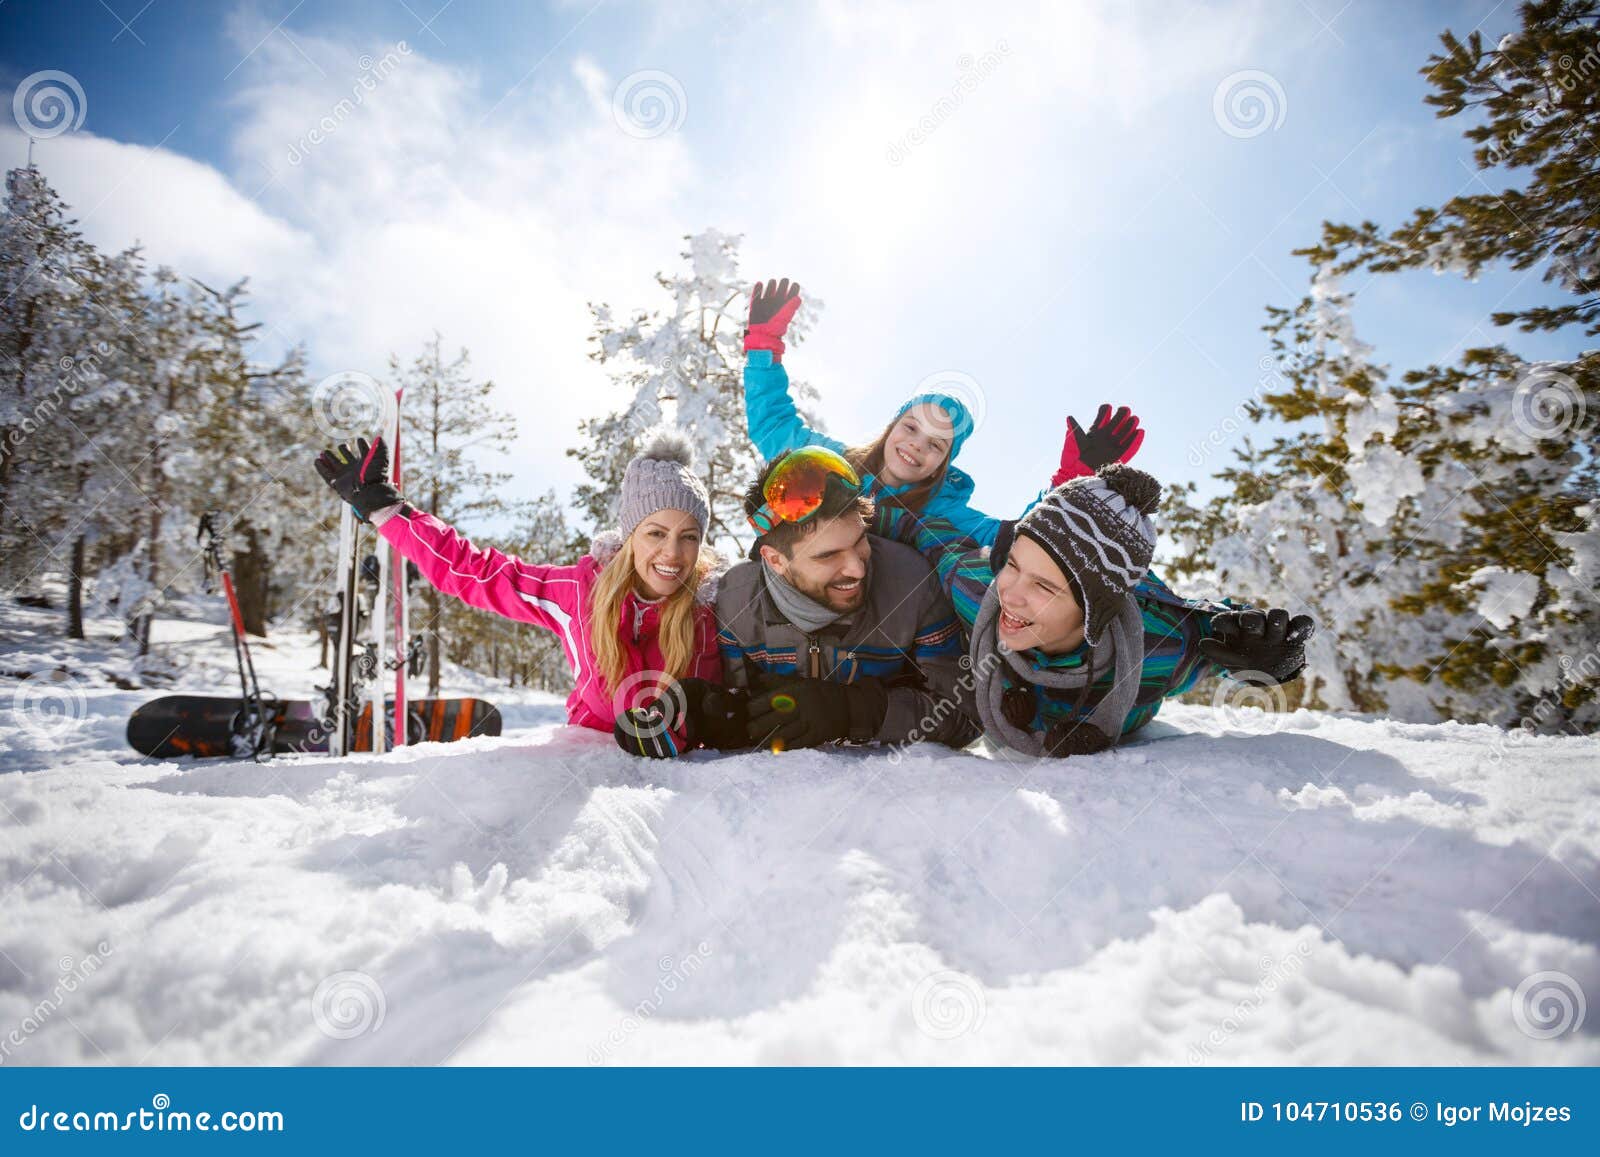 young-family-having-fun-snow-mountain-young-family-children-having-fun-snow-mountain-104710536.jpg